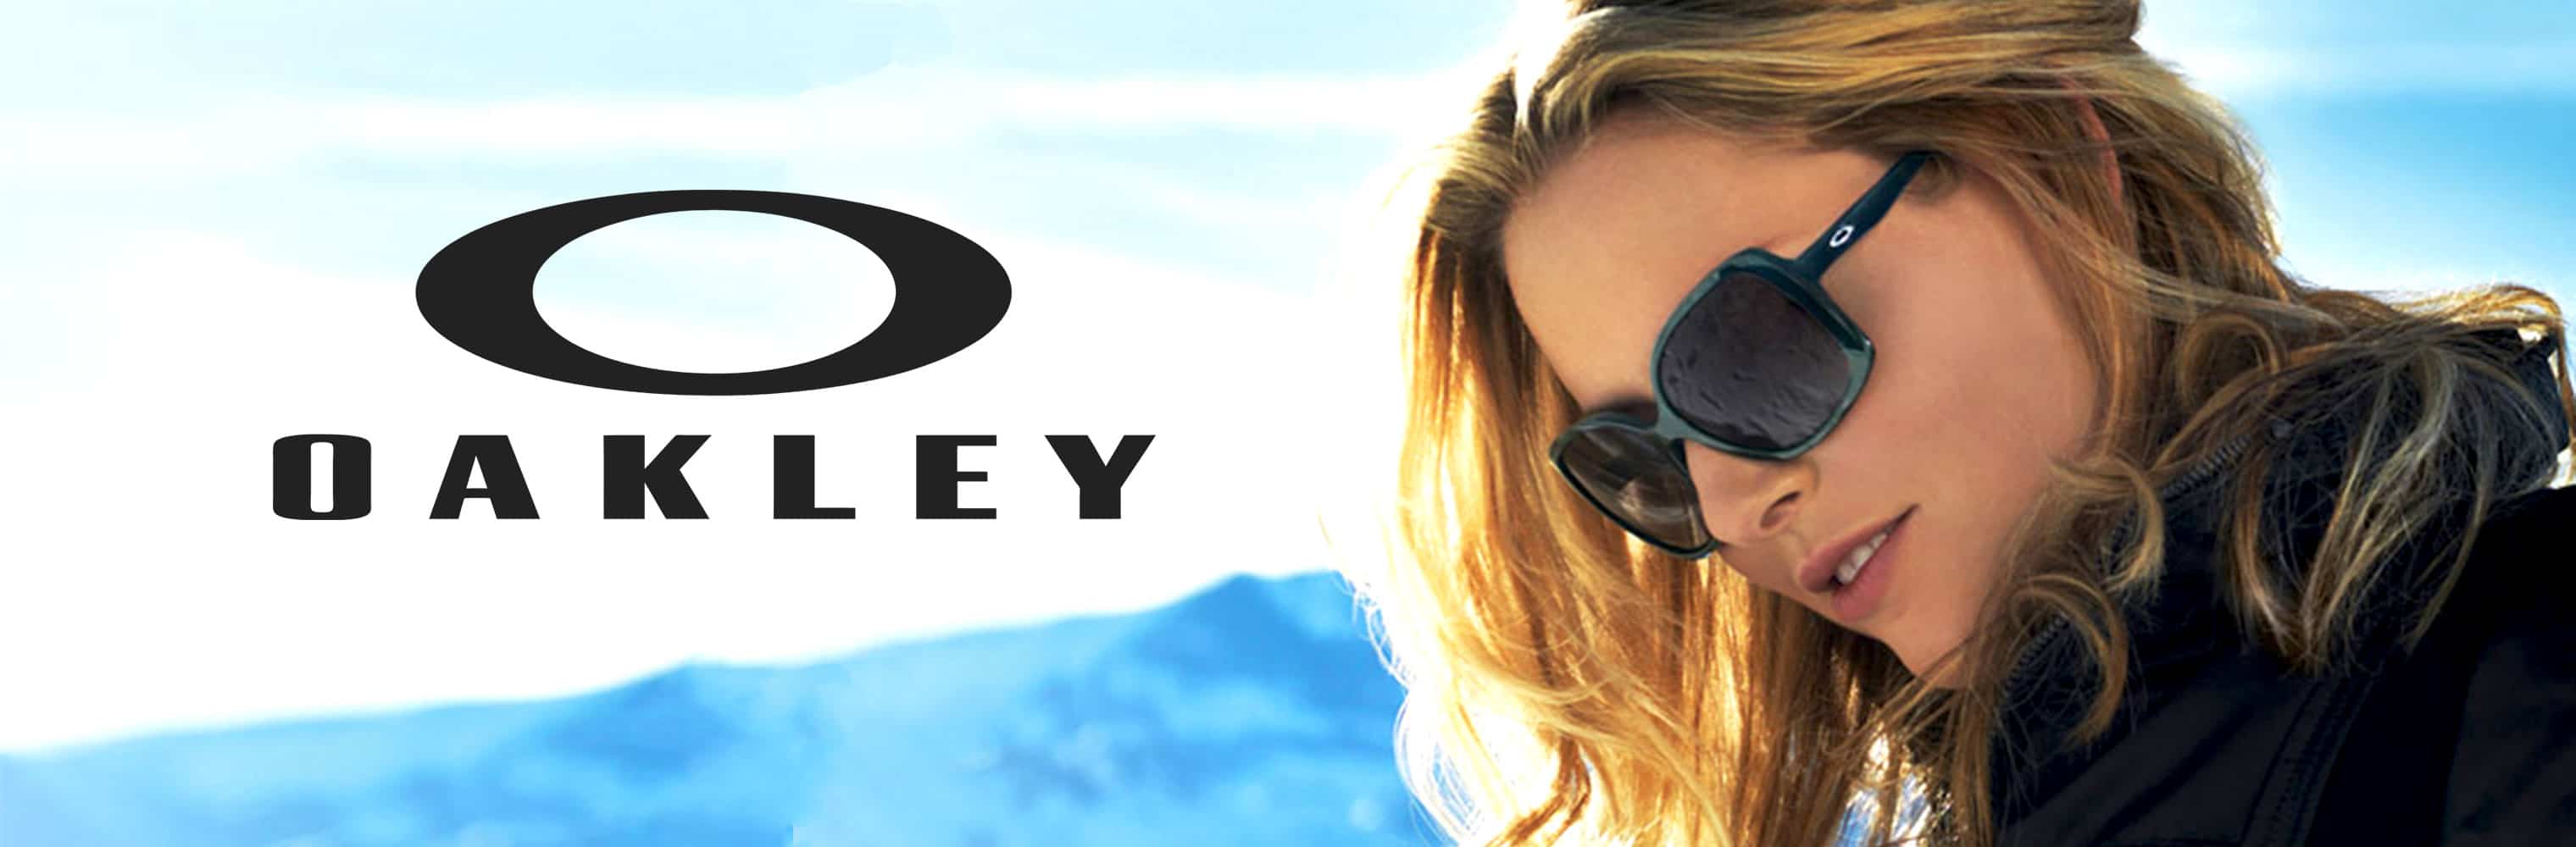 womens sunglasses oakley